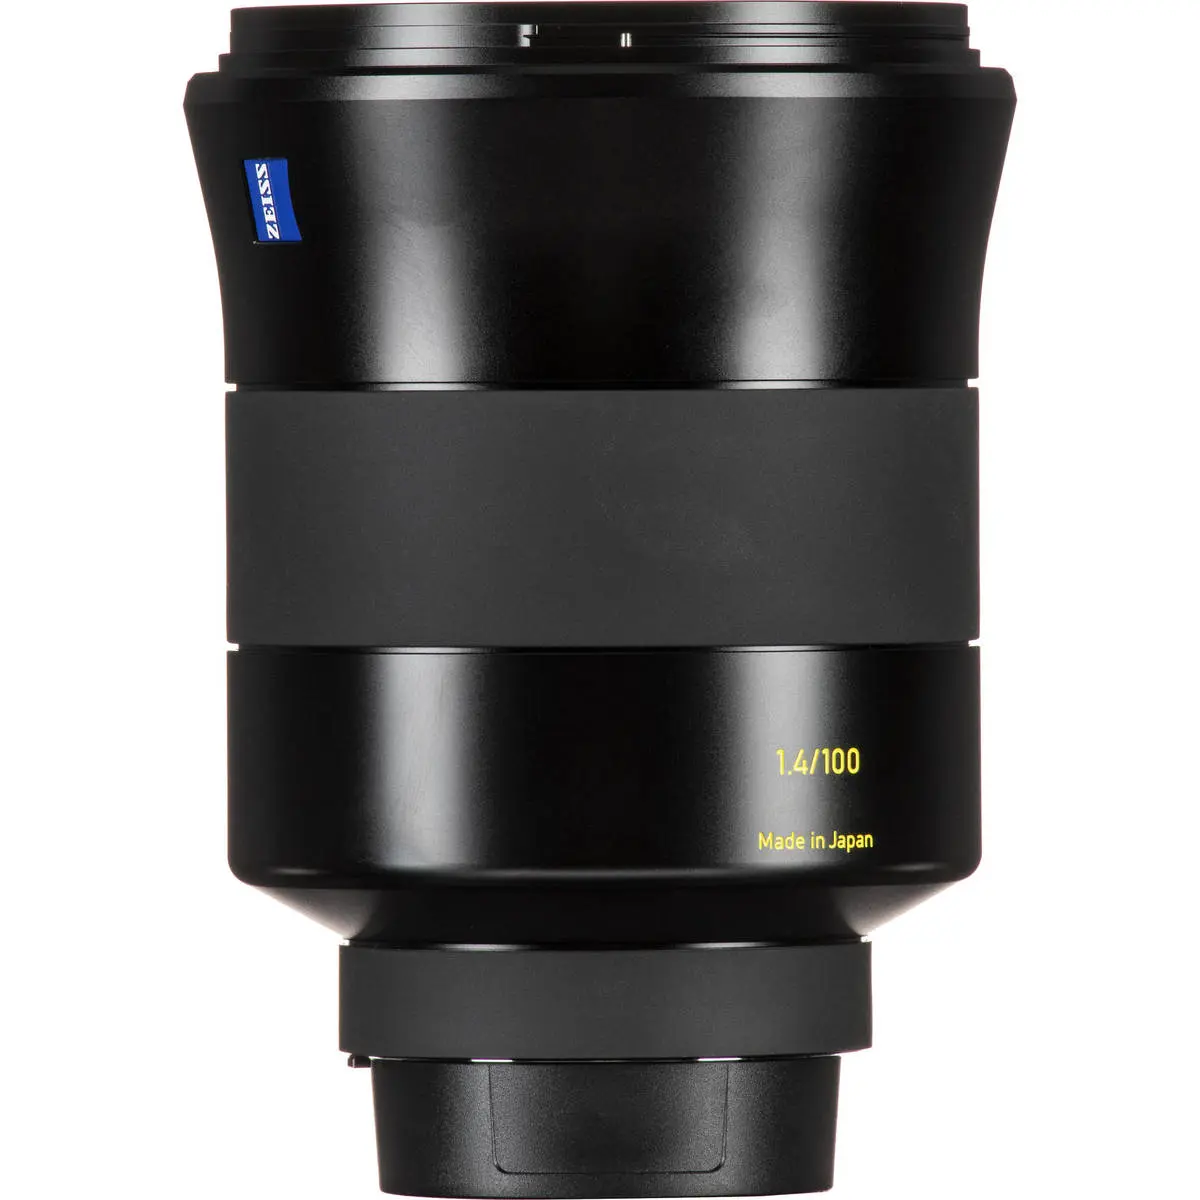 6. Carl Zeiss Otus 1.4/100 ZF.2 (Nikon) Lens